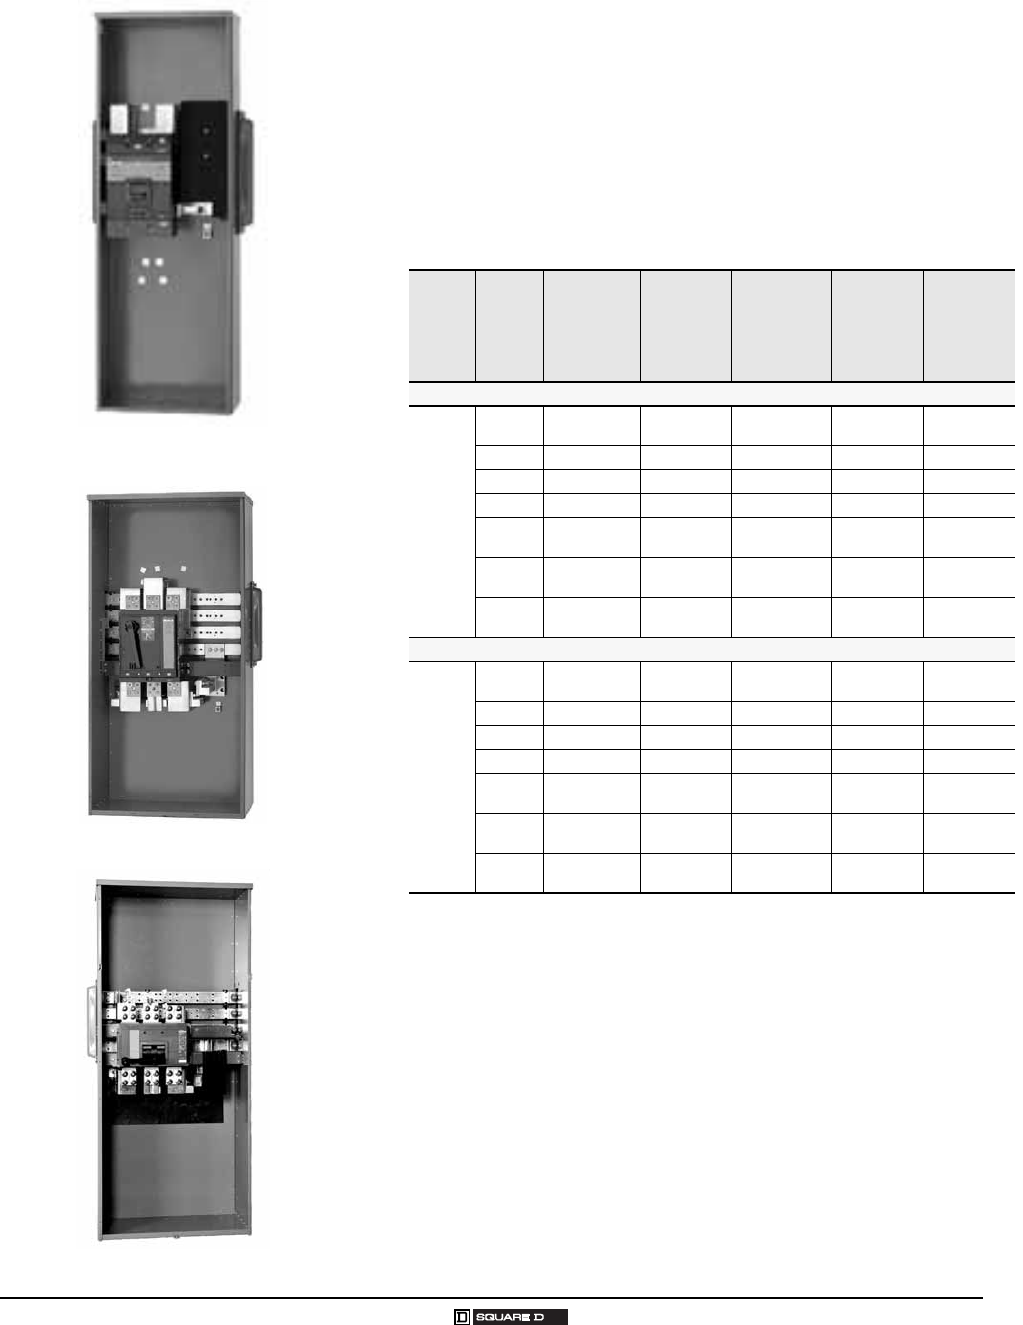 Square D Breaker Handle Cover for EZ Meter-pak EZMR333225 3 Phase 120/208 Volt for sale online 